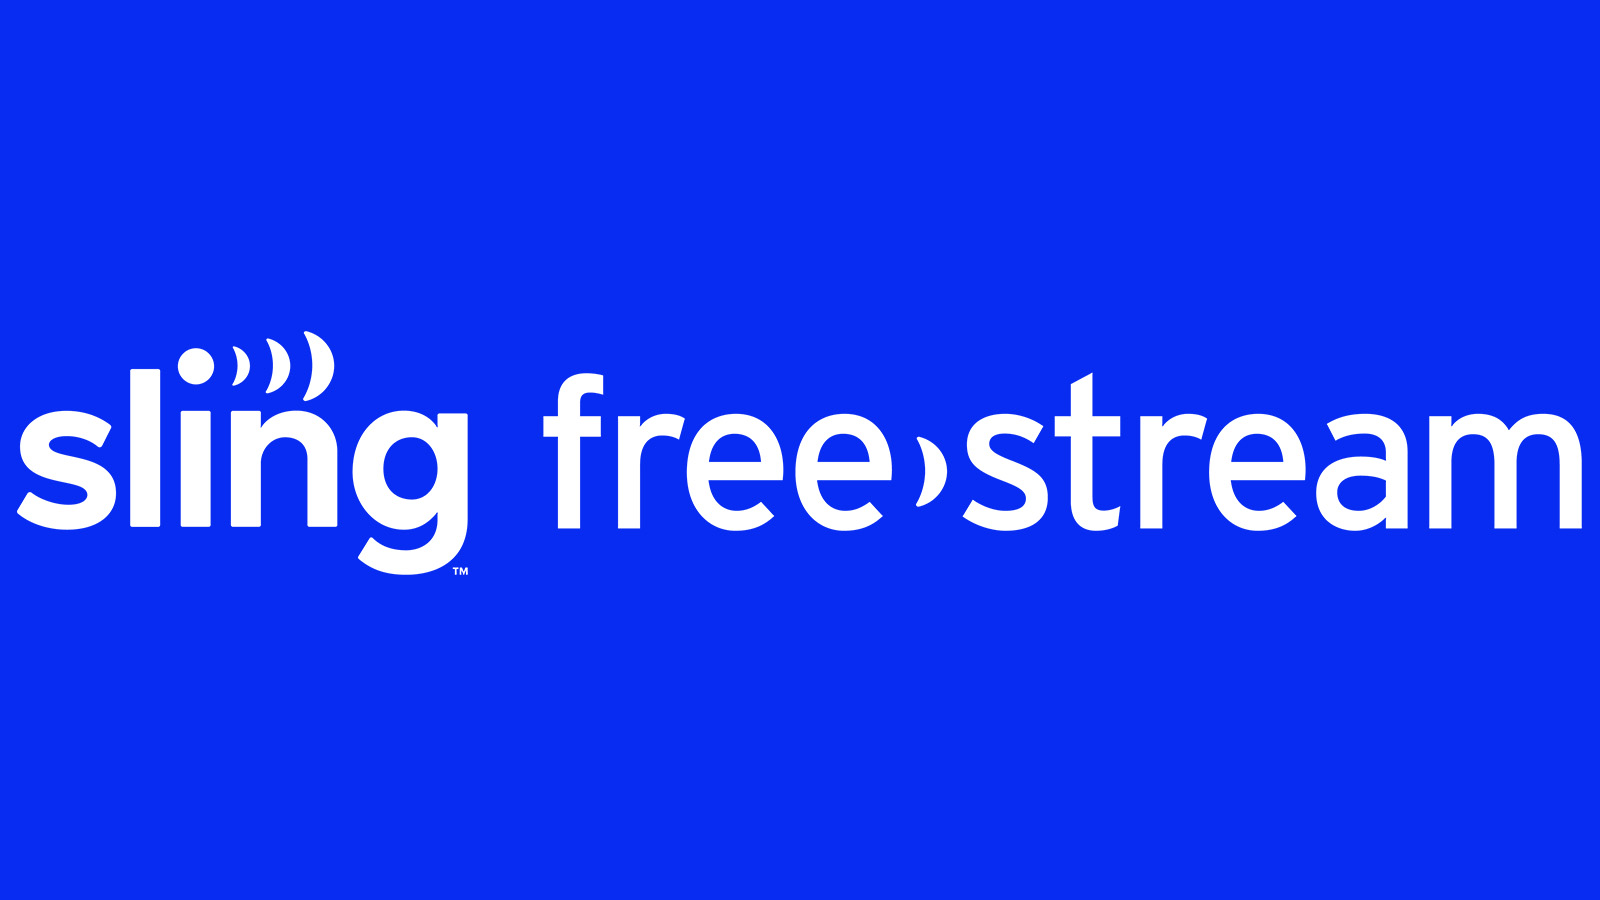 Sling Freestream